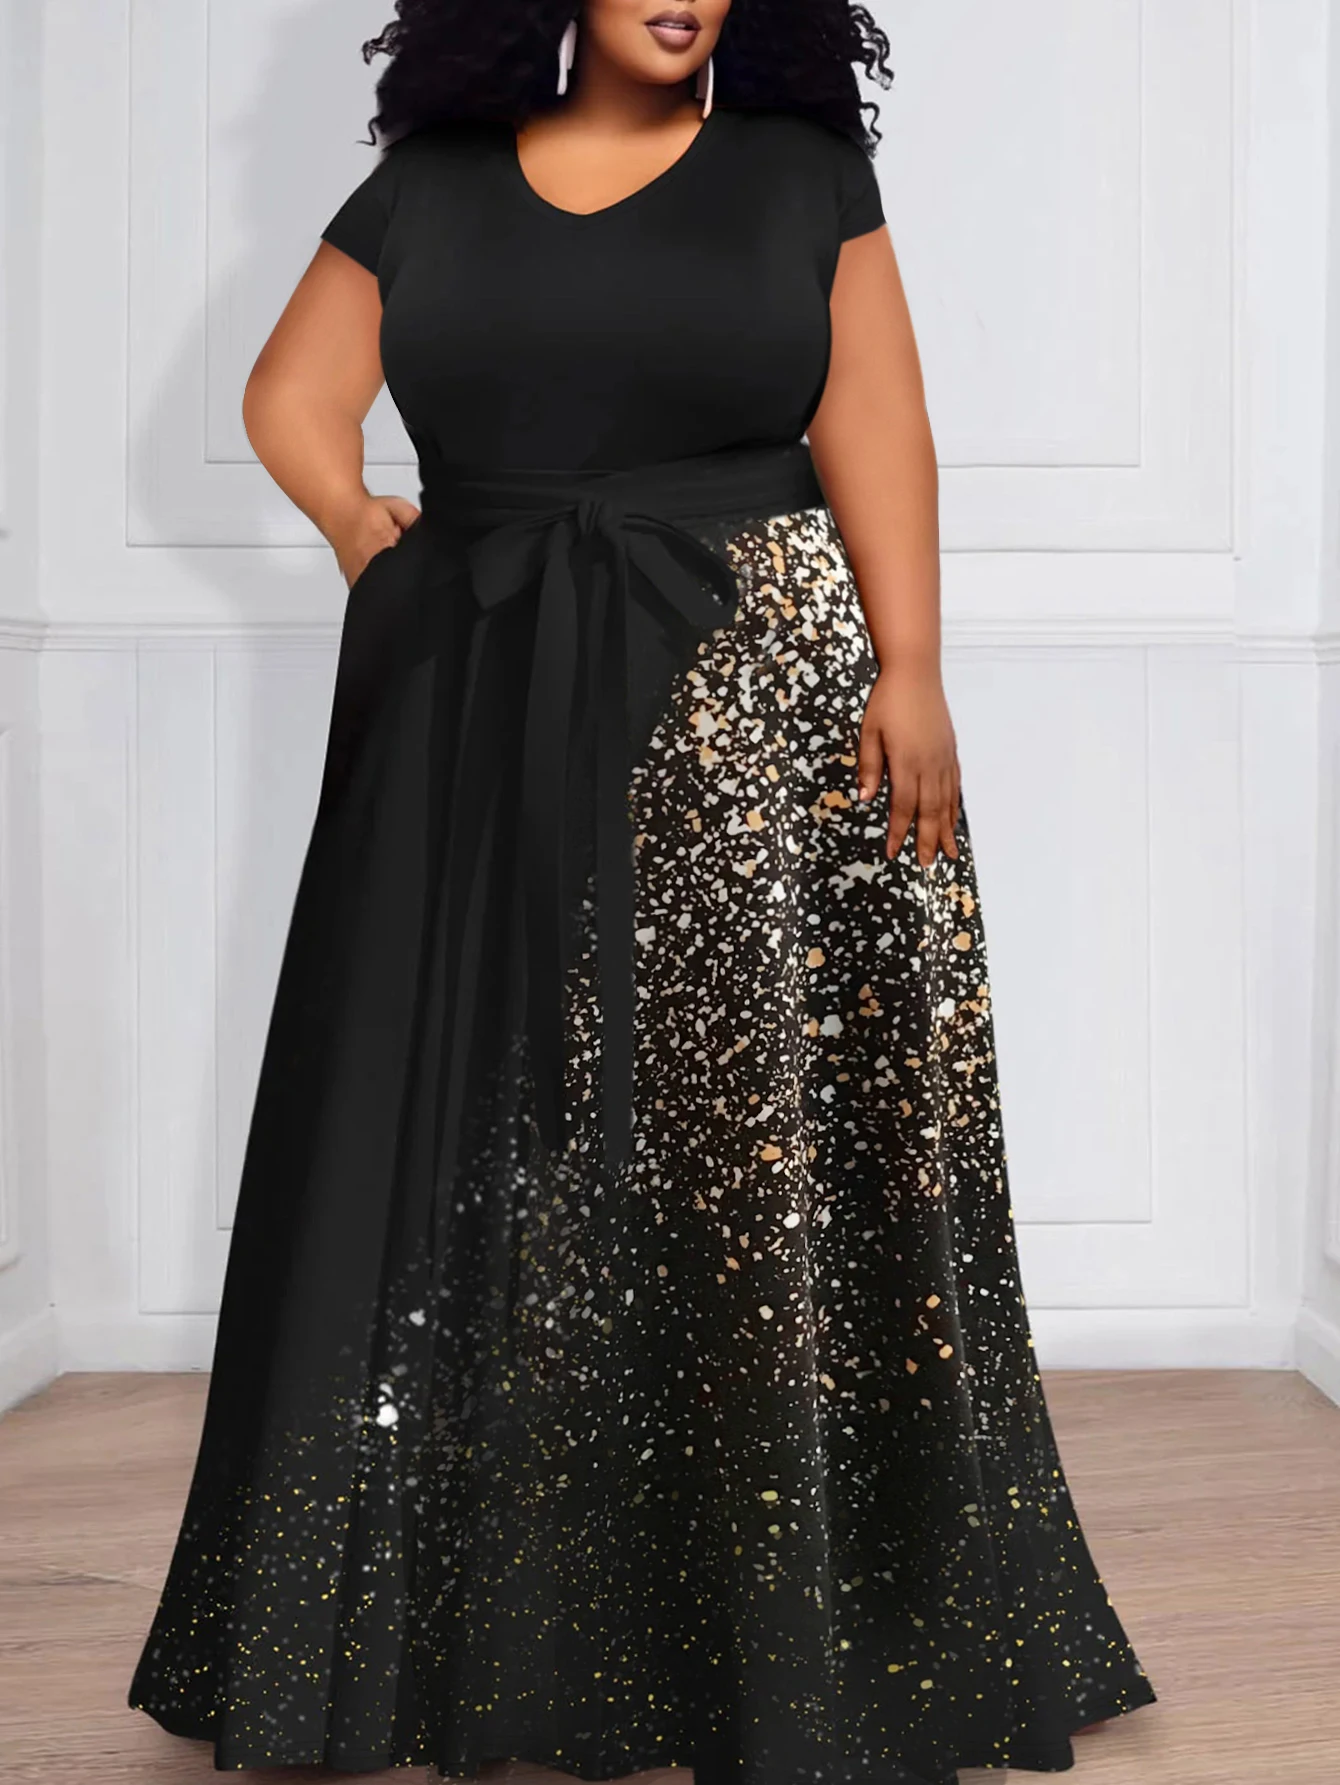 

LW Plus Size dresses Sequined Pocket Design A Line Dress women's party Evening dress vestido black short sleeve maxi dress